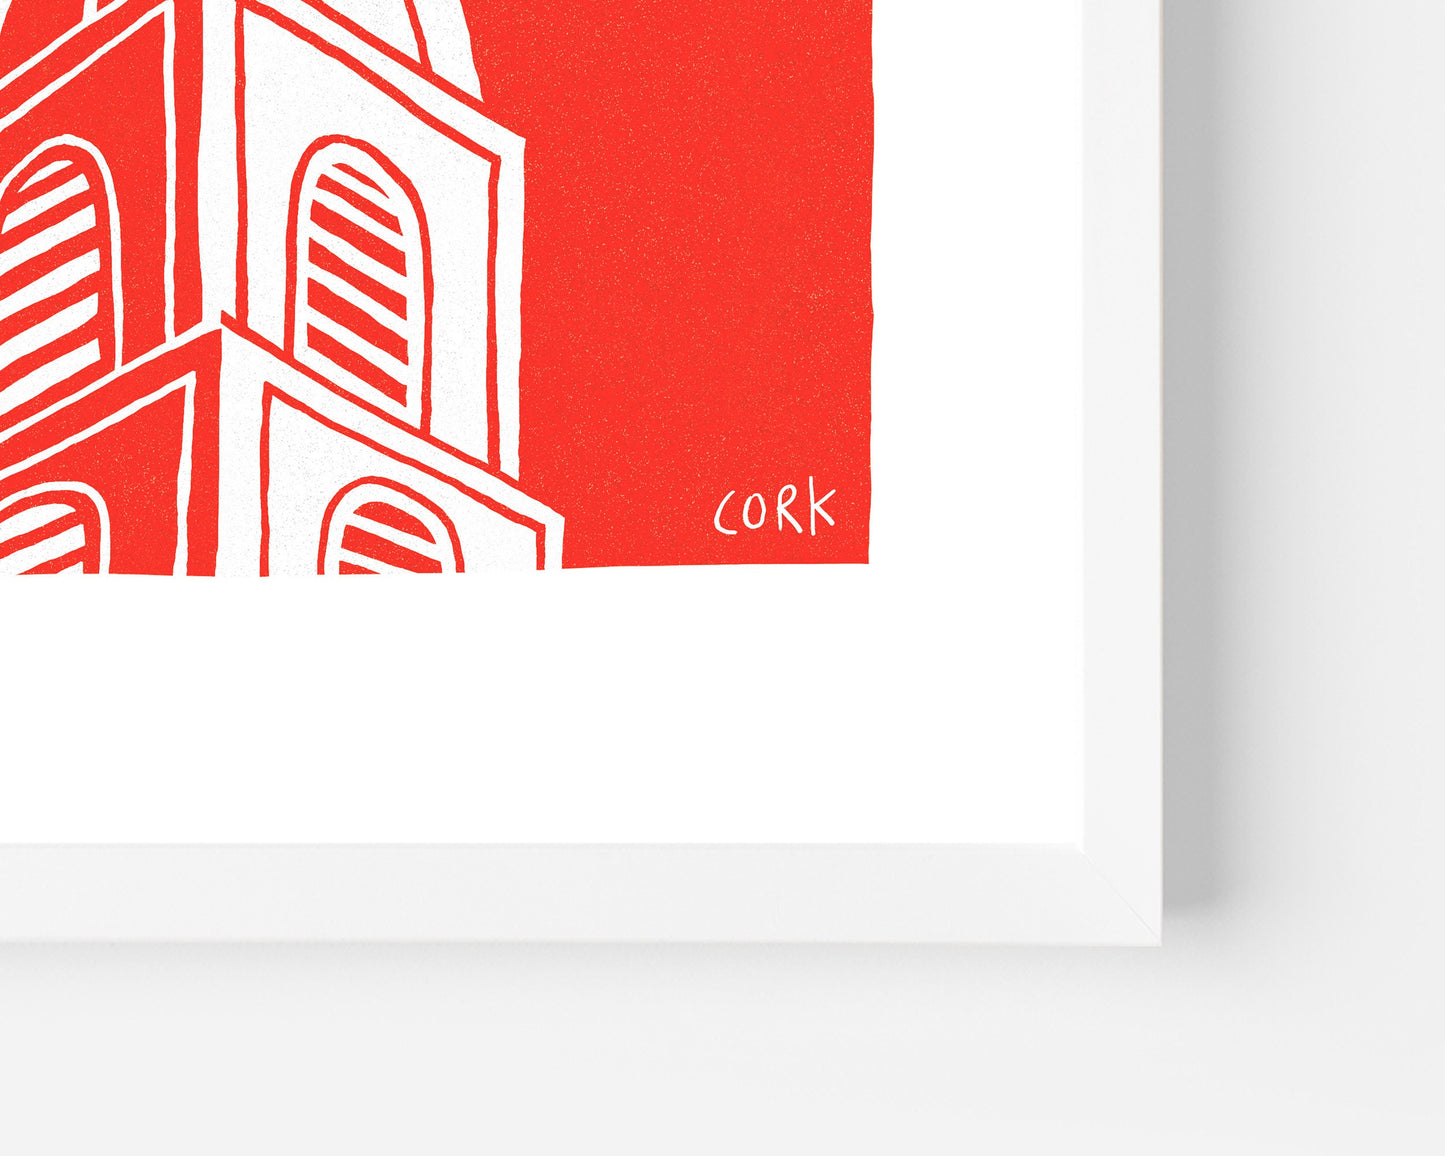 CORK, Ireland – A4 / A3 print, Red